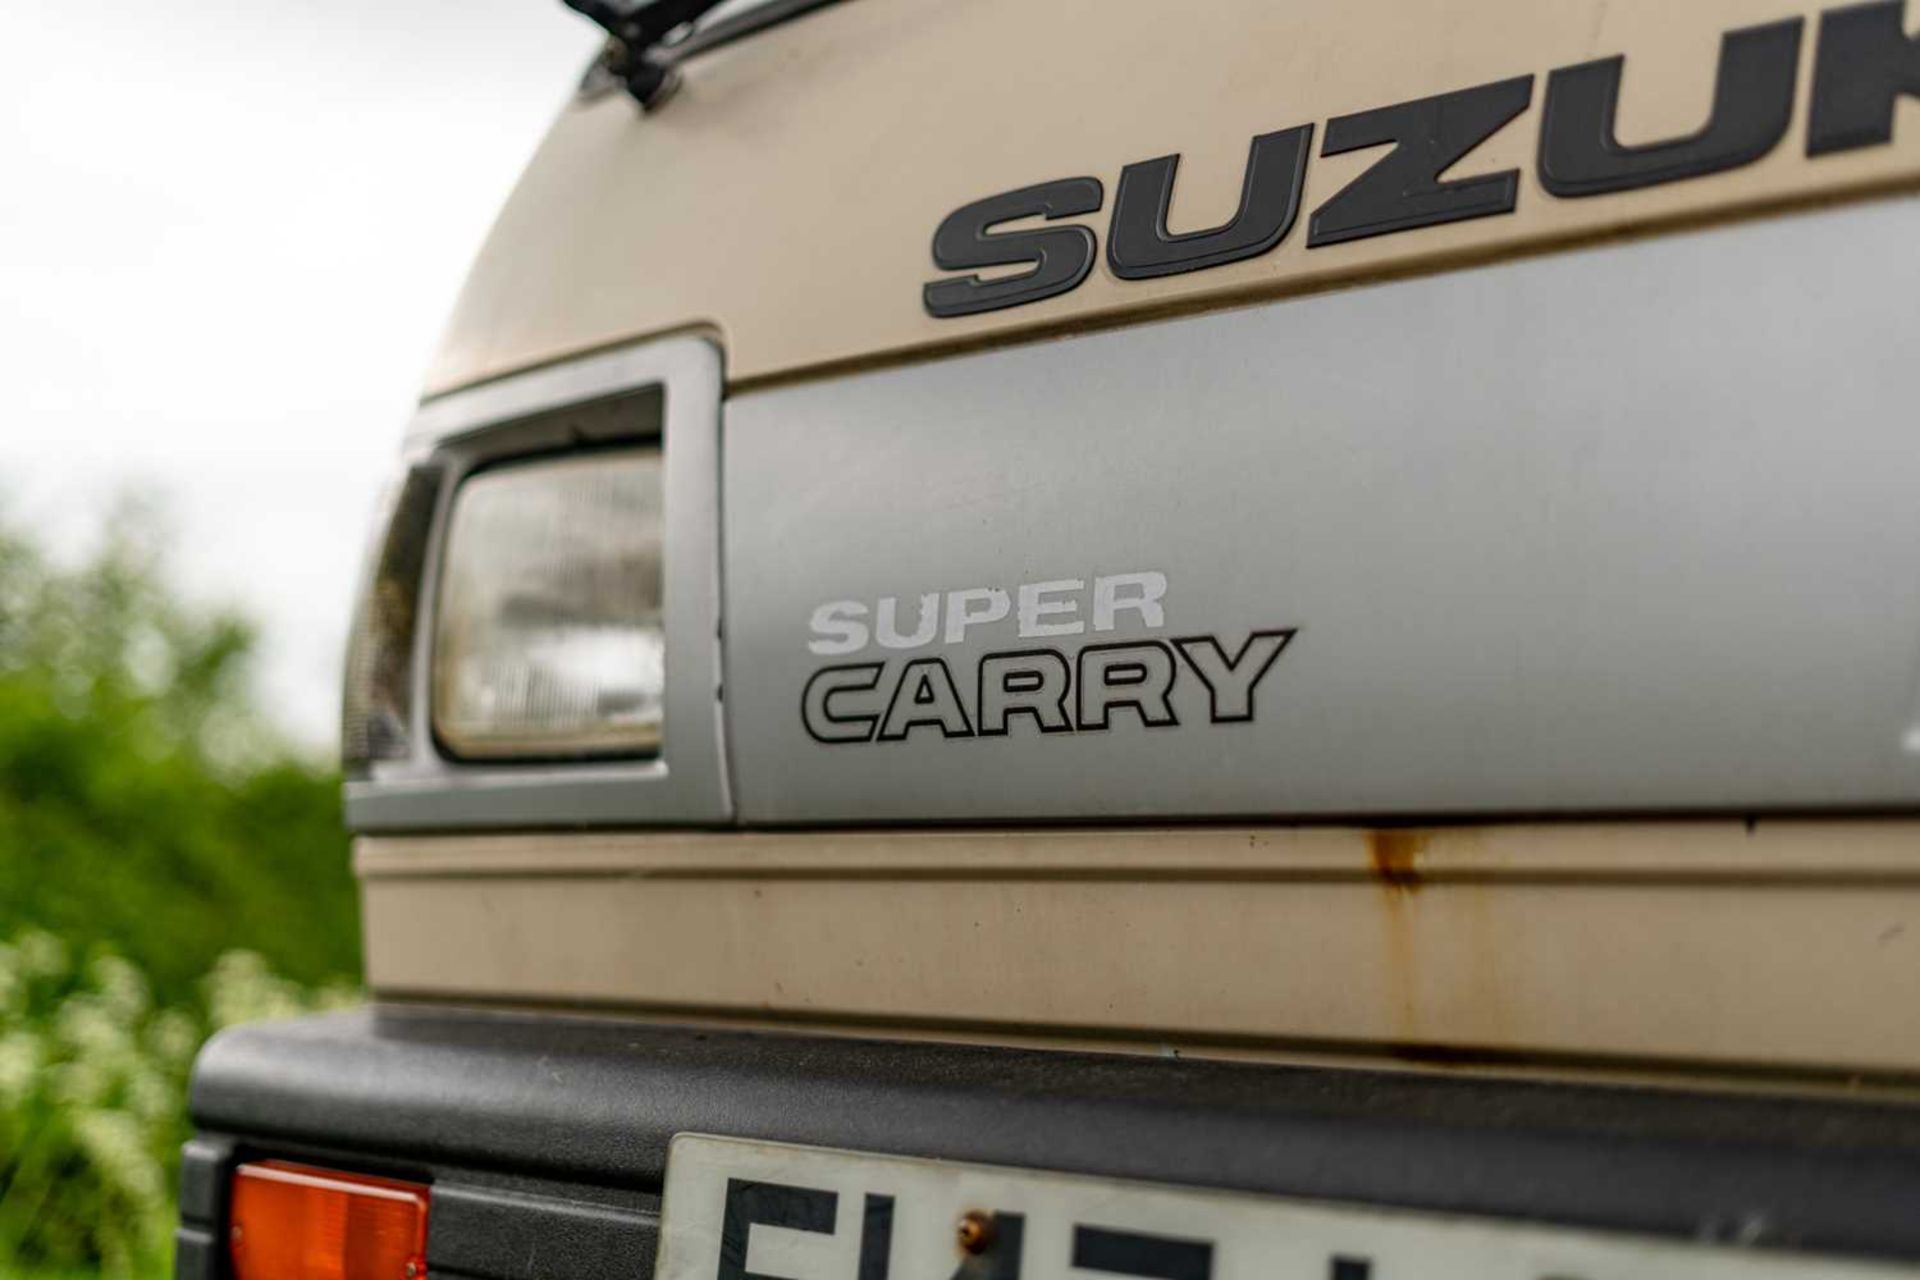 1987 Suzuki TX Super Carry  ***NO RESERVE*** - Image 16 of 38